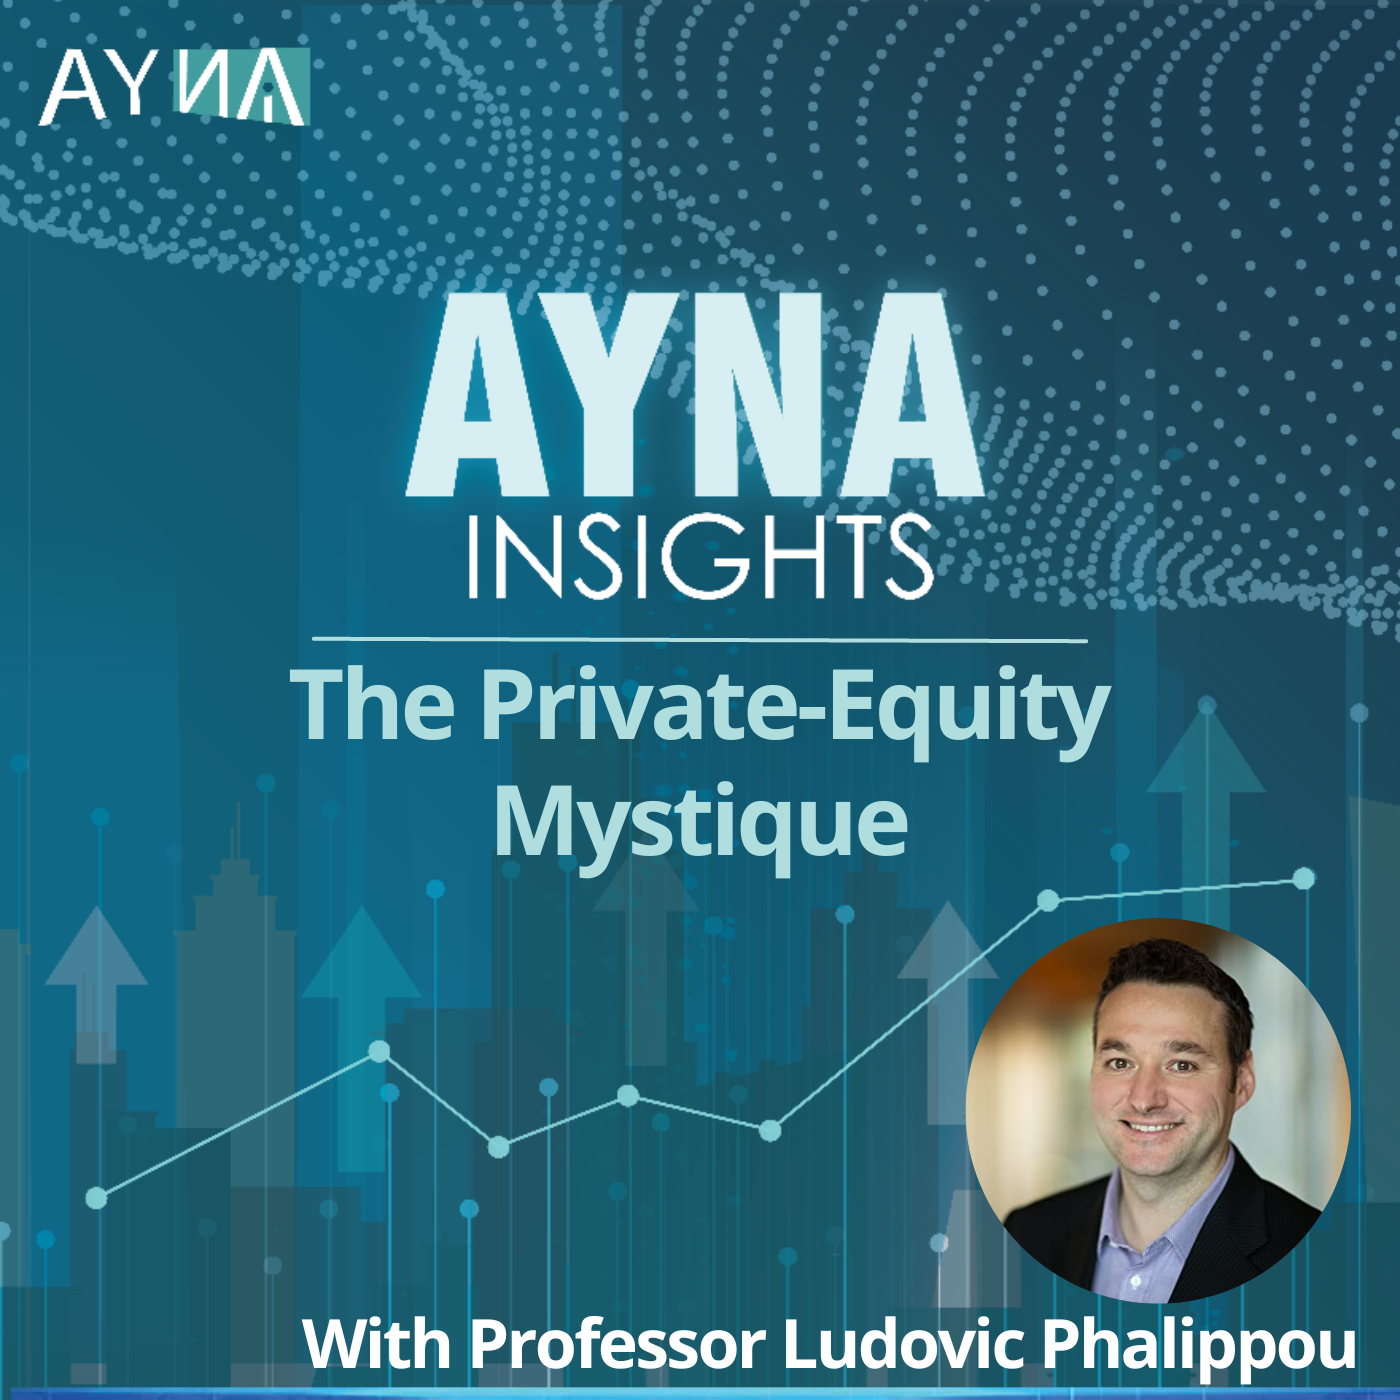 Professor Ludovic Phalippou: The Private-Equity Mystique